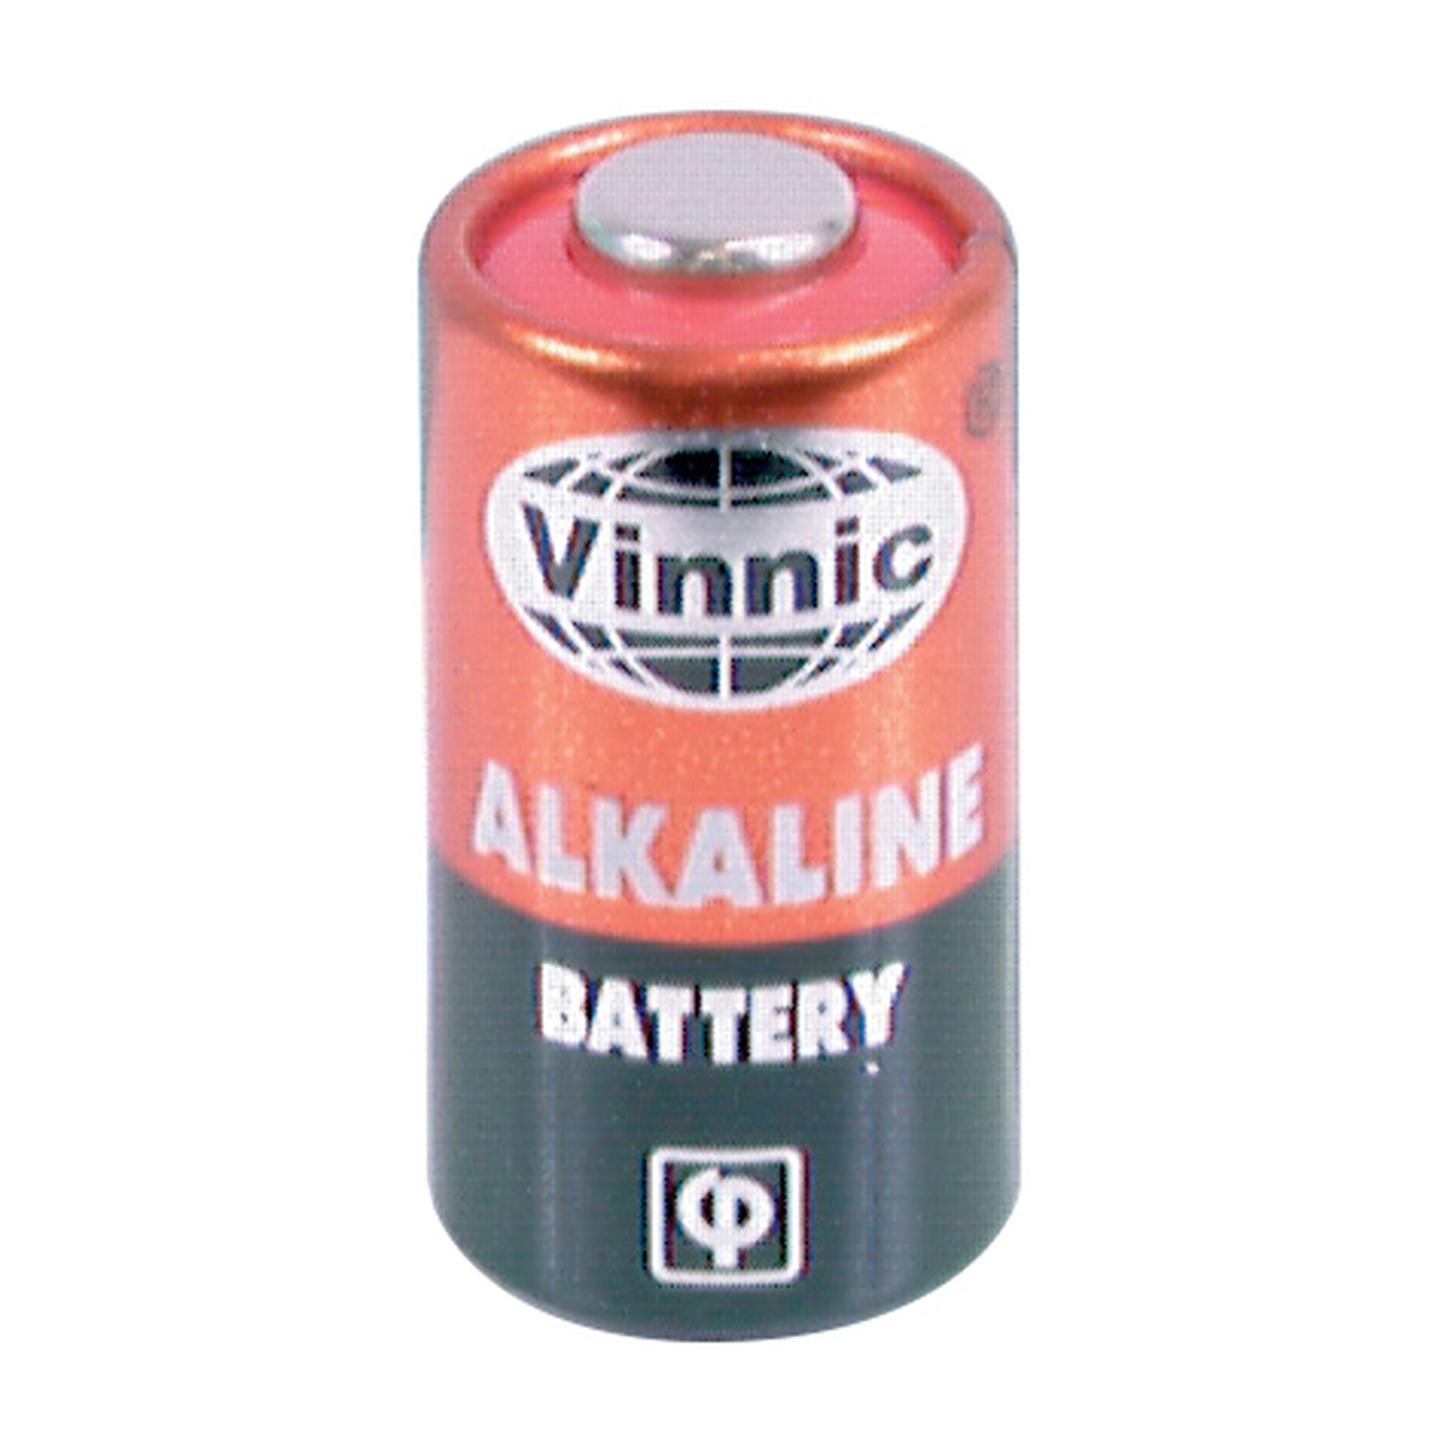 6 Volt 4LR44 Alkaline Battery